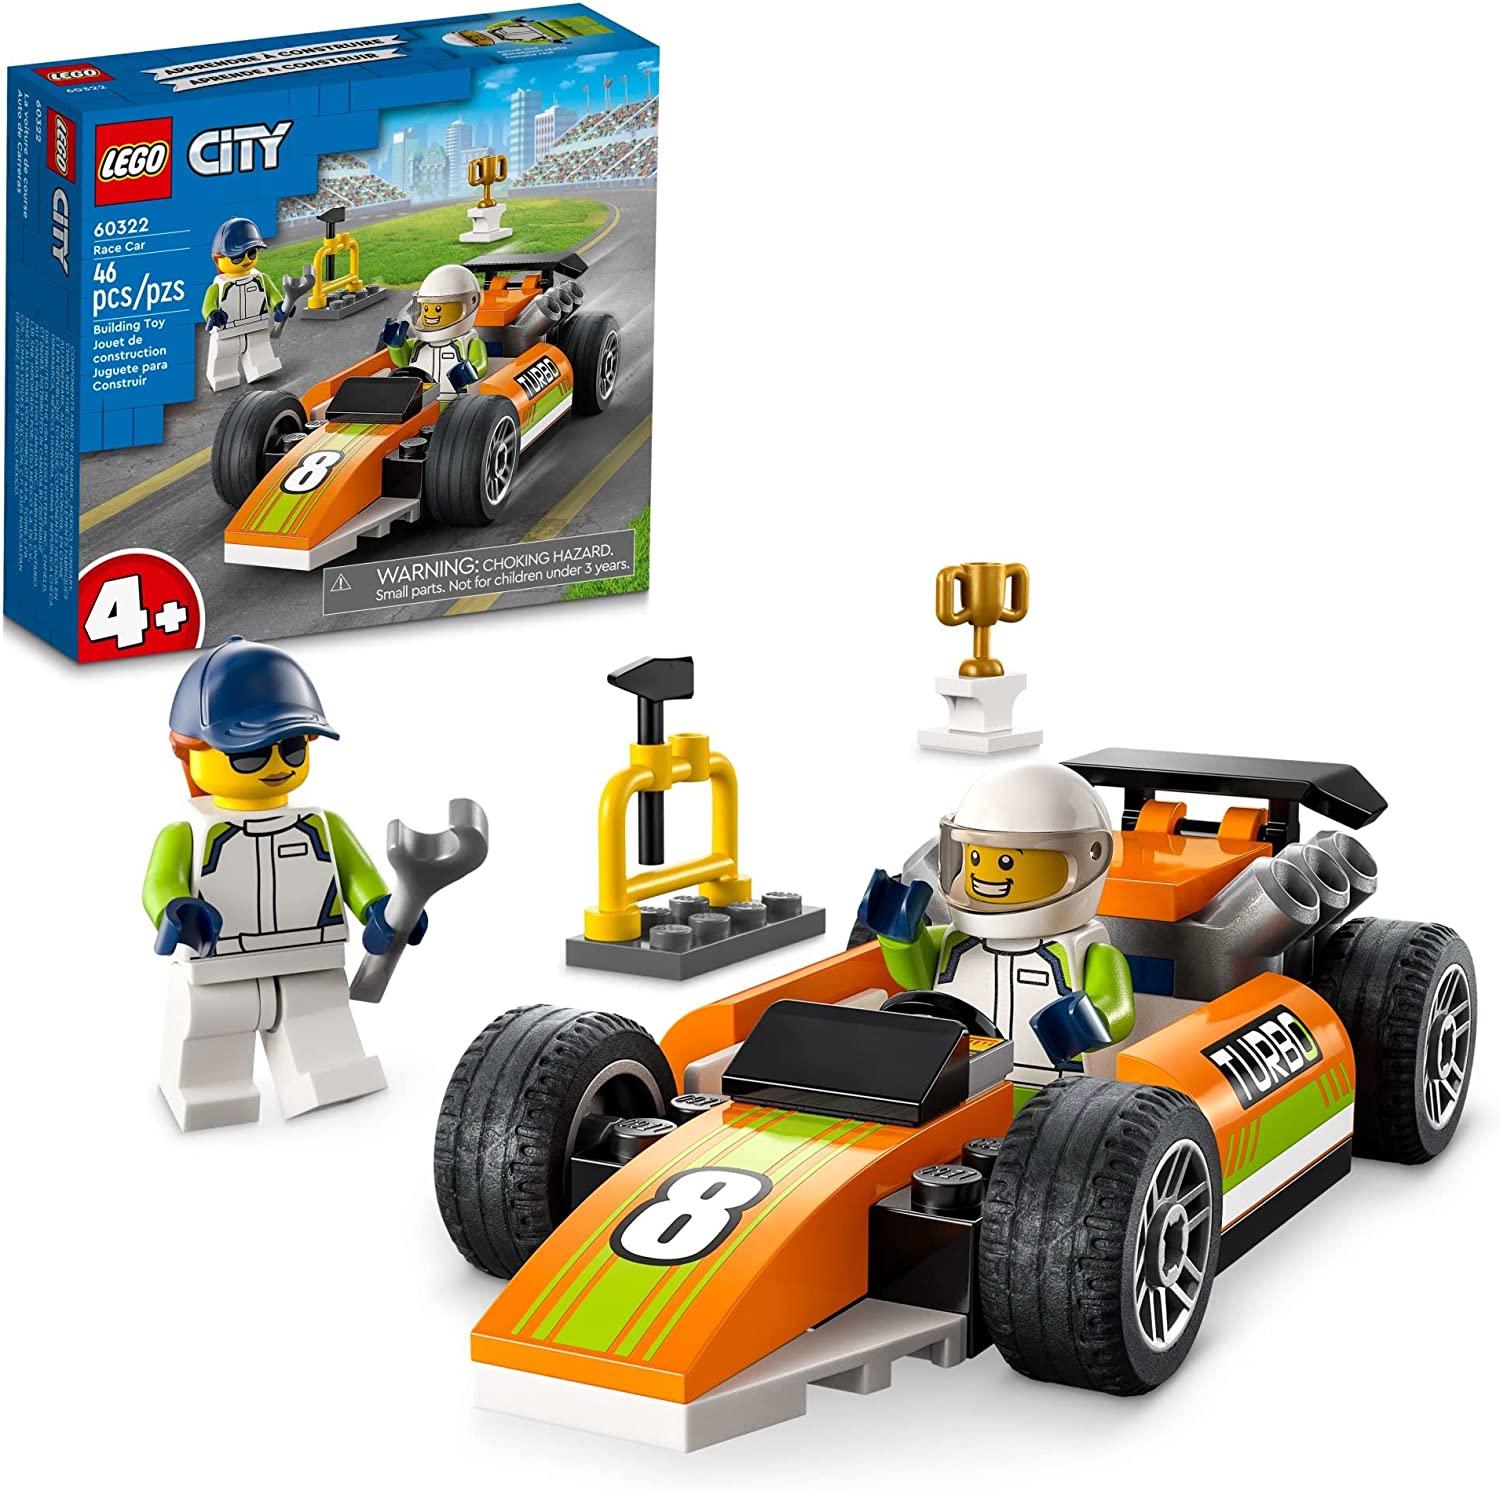 Lego City 60322 Great Vehicles Race Car 